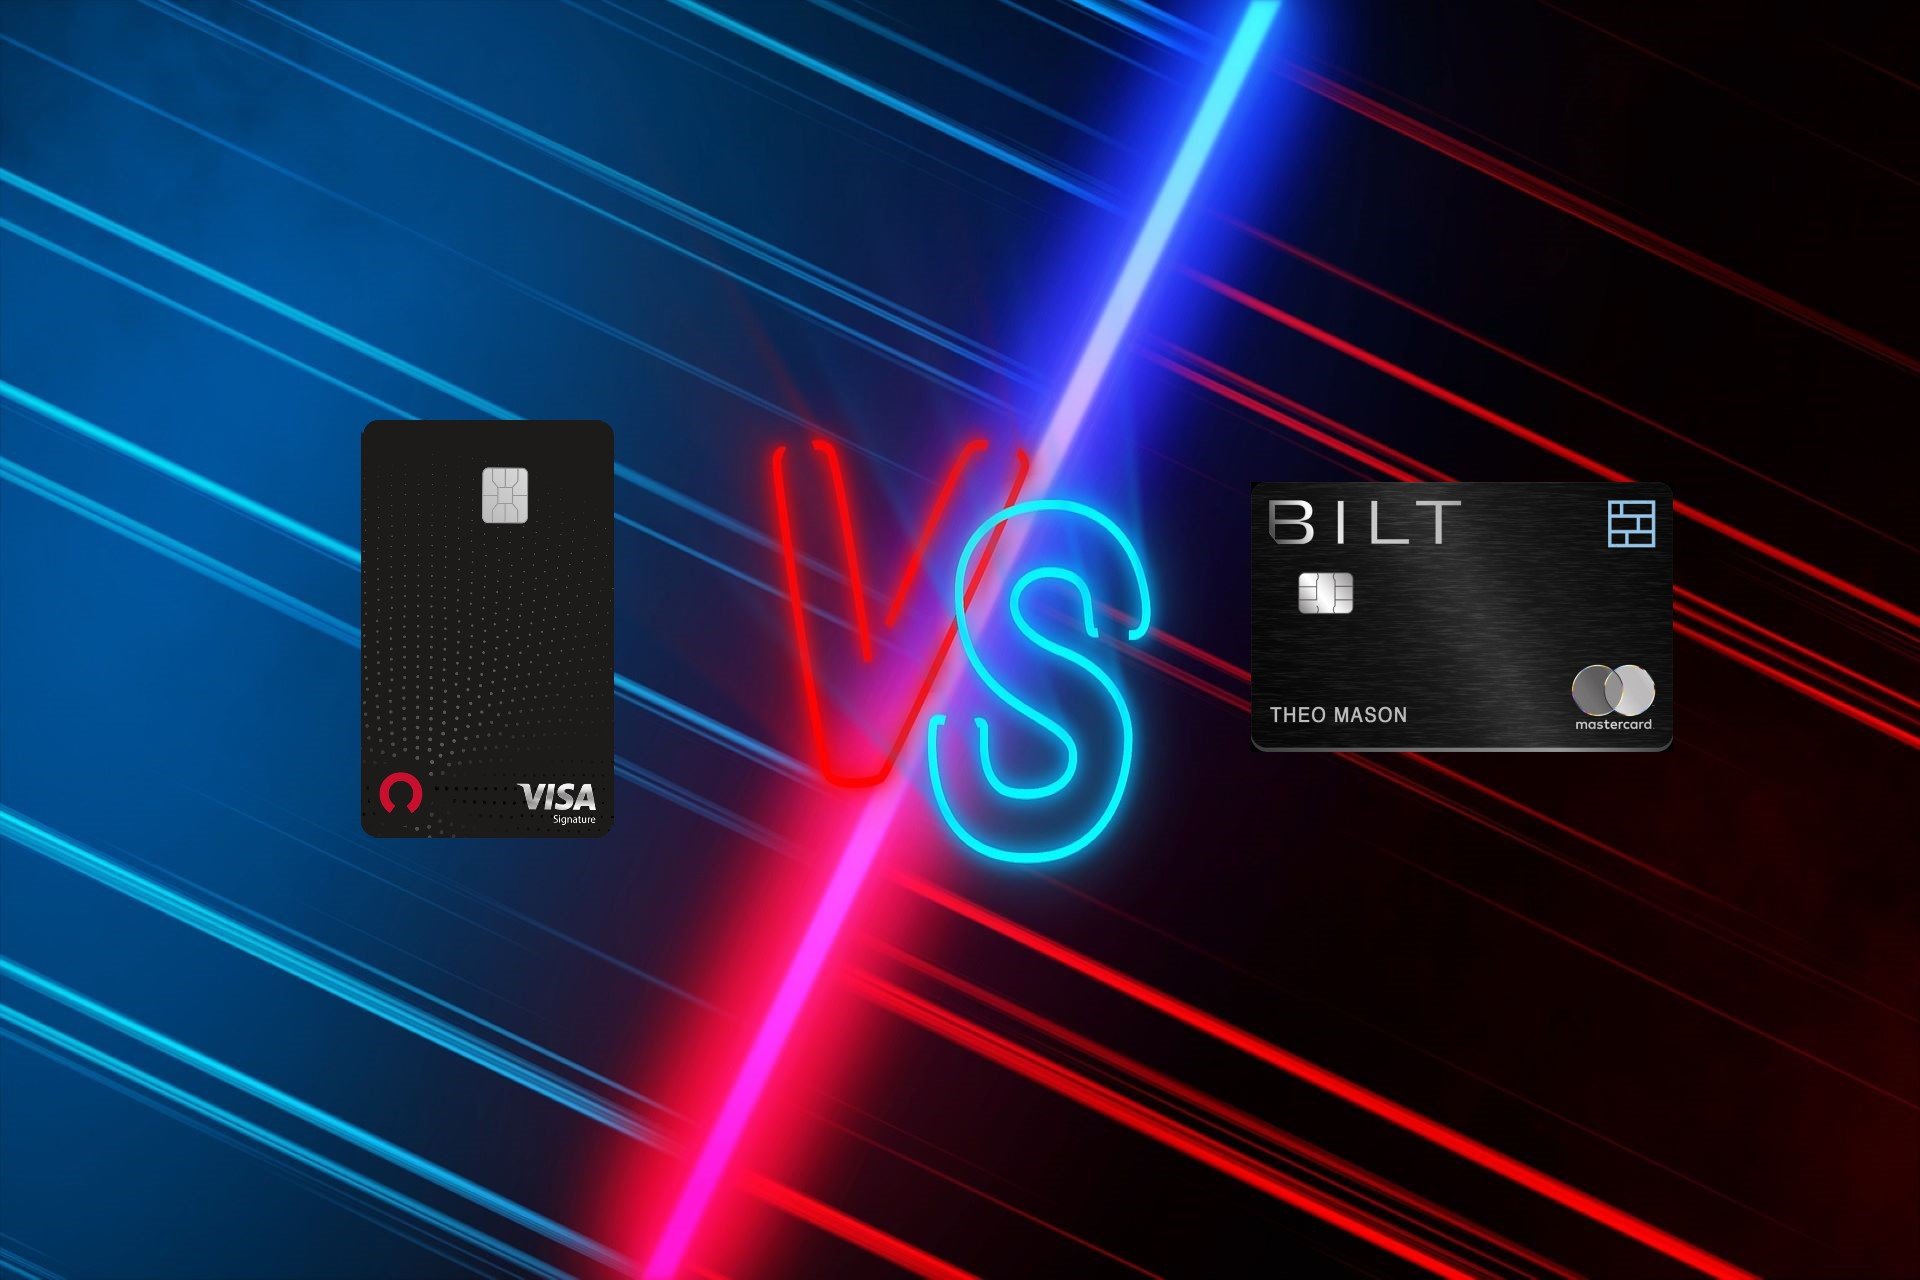 Bilt Mastercard versus Rocket Visa Signature which card is best for you?